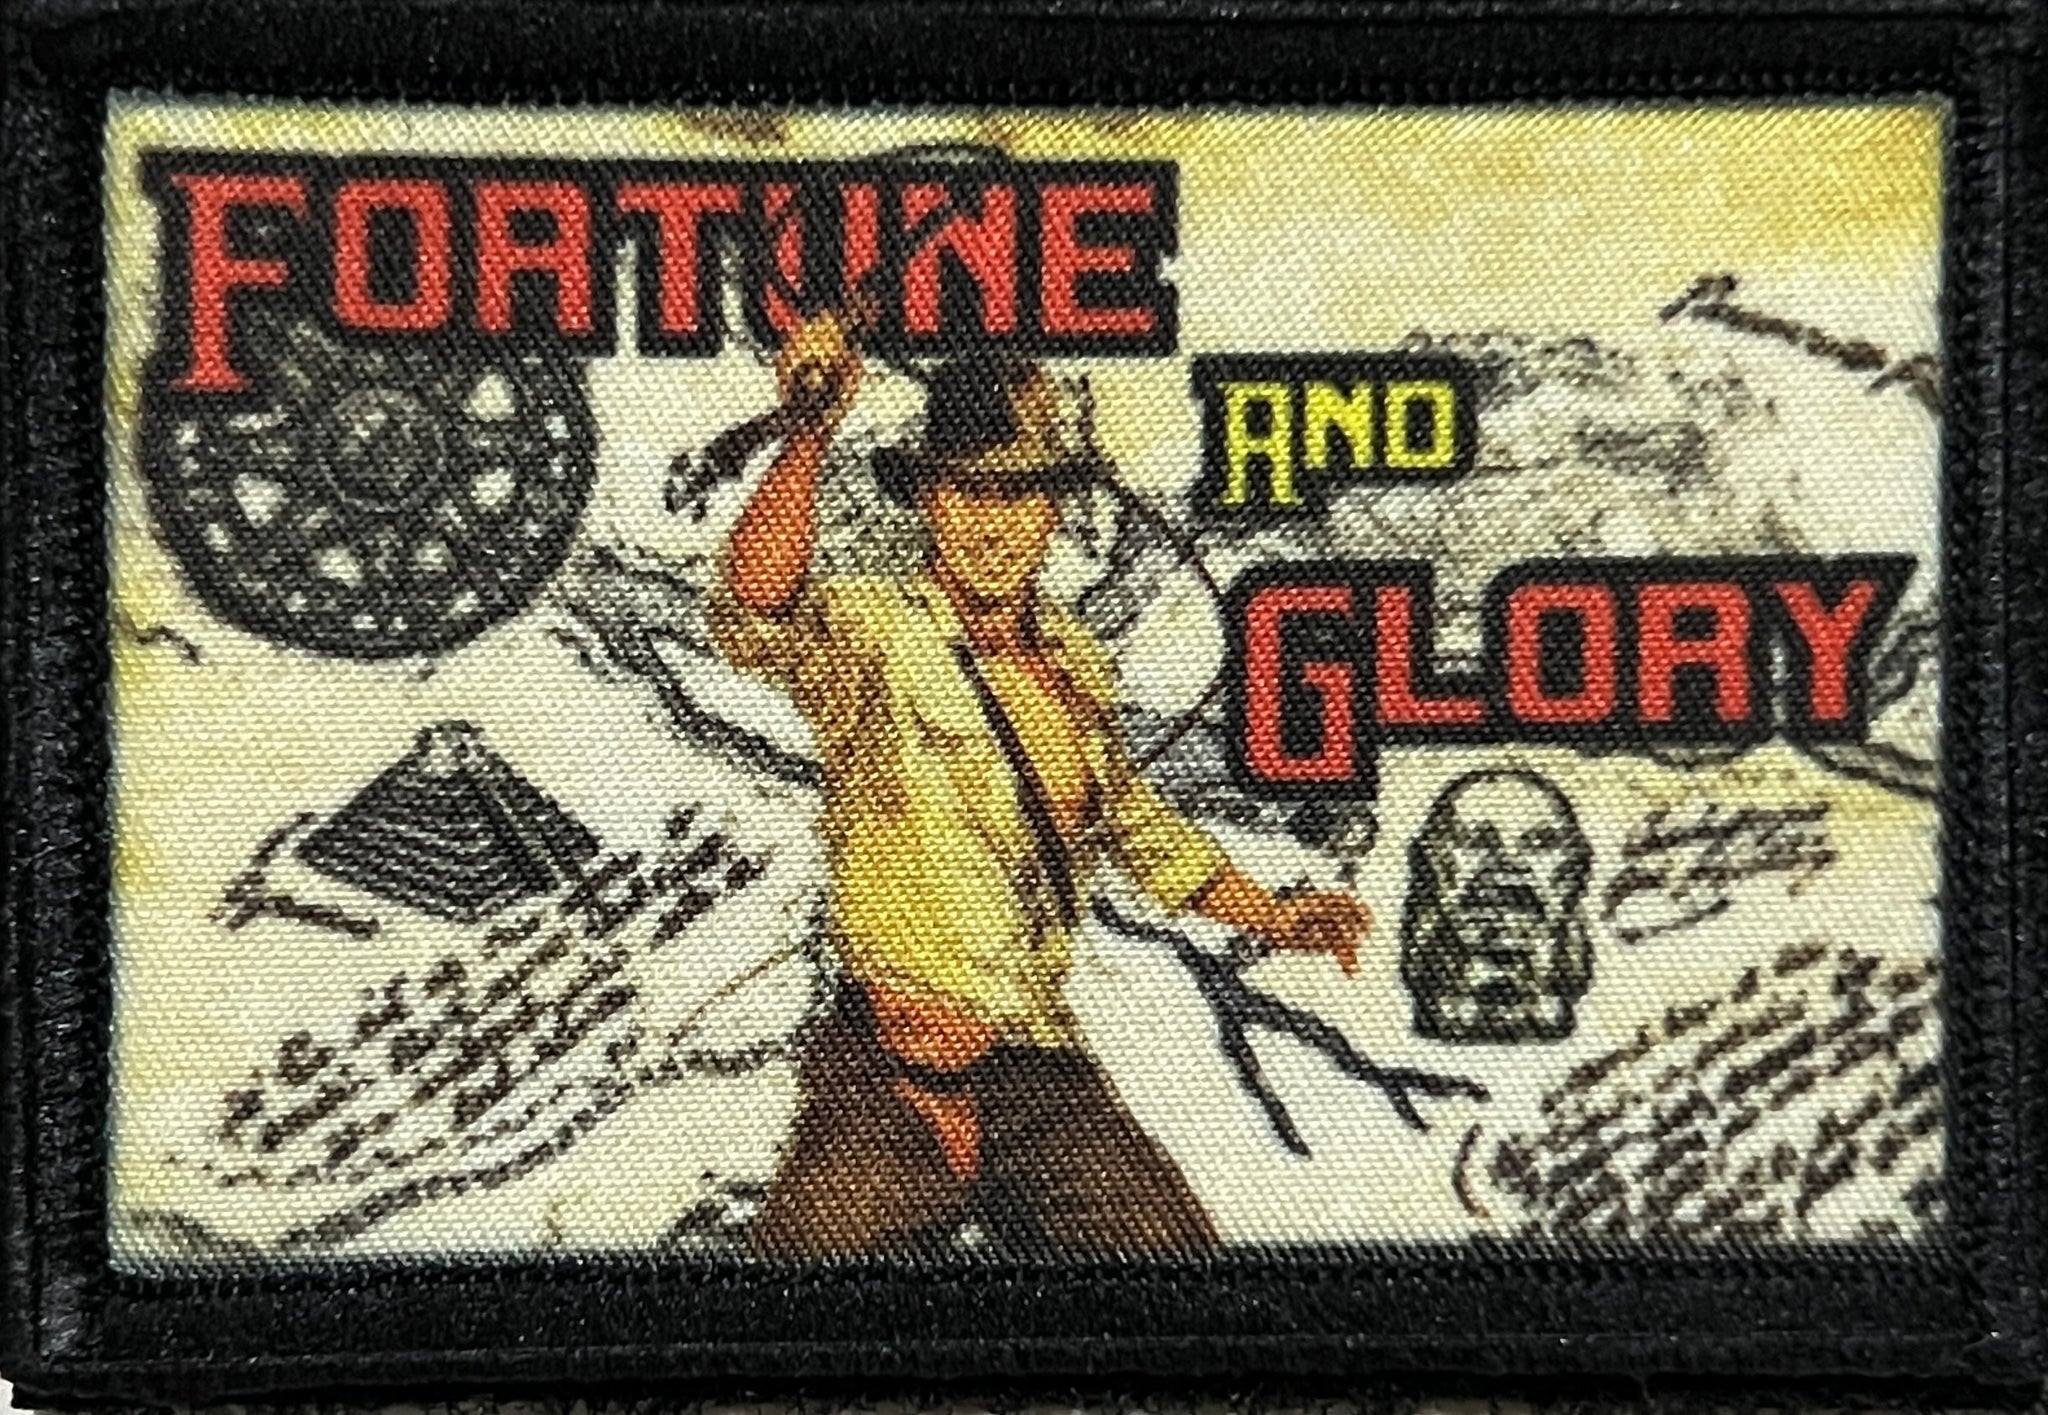 Indiana Jones Fortune and Glory